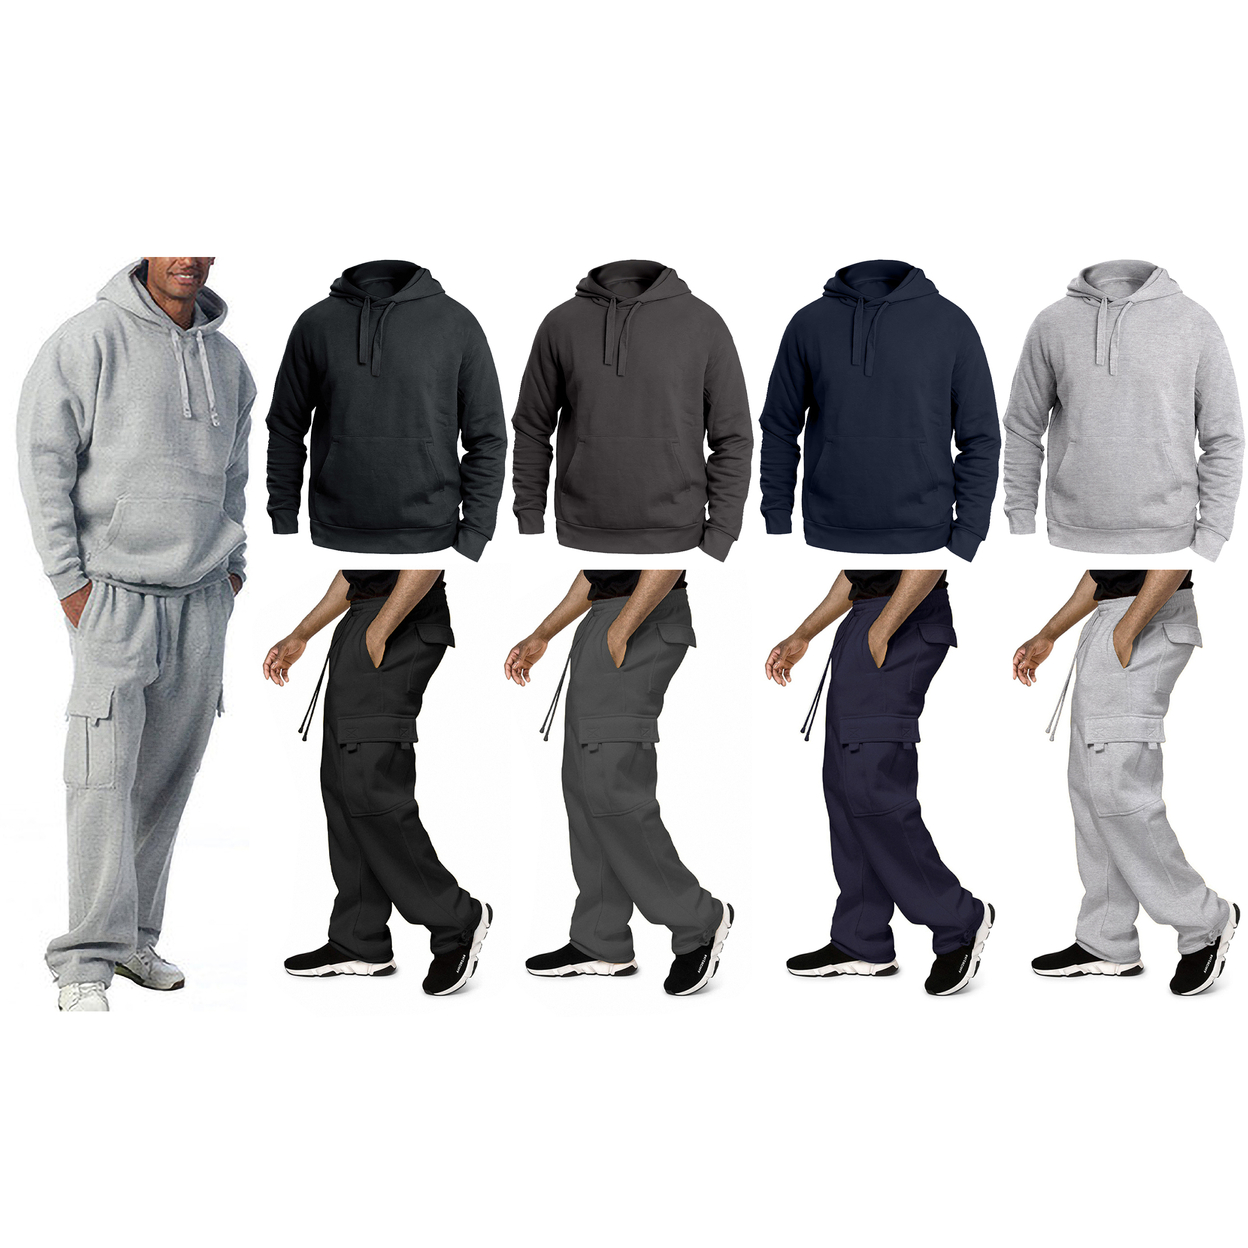 2-Pack: Men's Big & Tall Winter Warm Cozy Athletic Fleece Lined Multi-Pocket Cargo Sweatsuit - Charcoal, 3xl